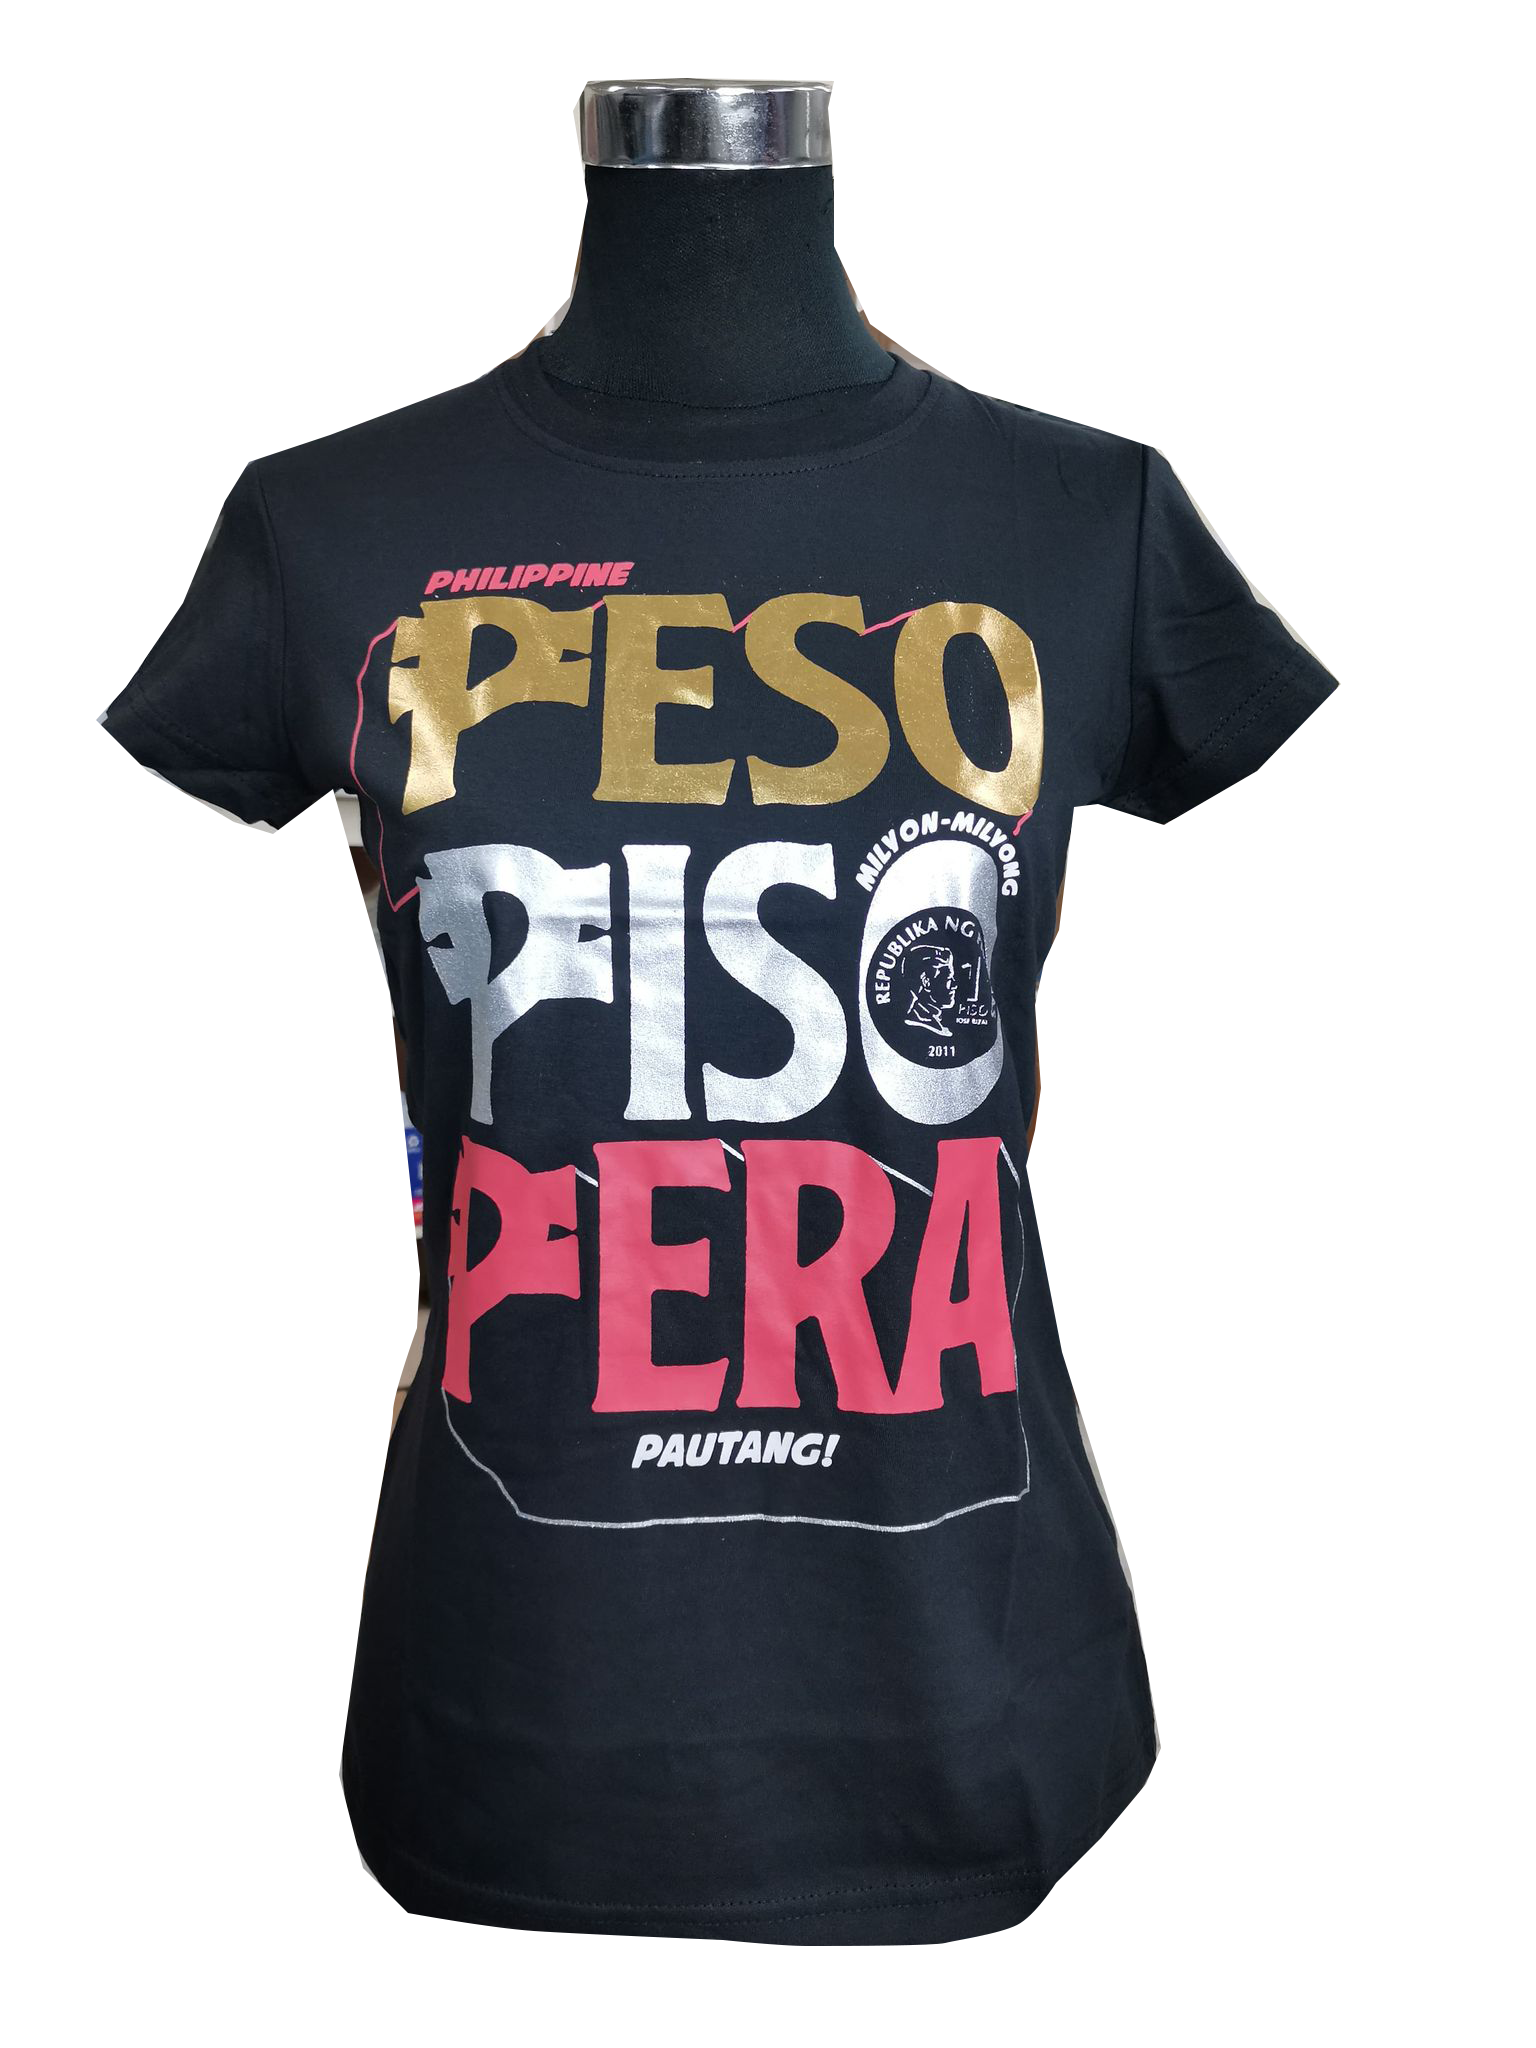 Peso Piso Pera T-shirt for Ladies